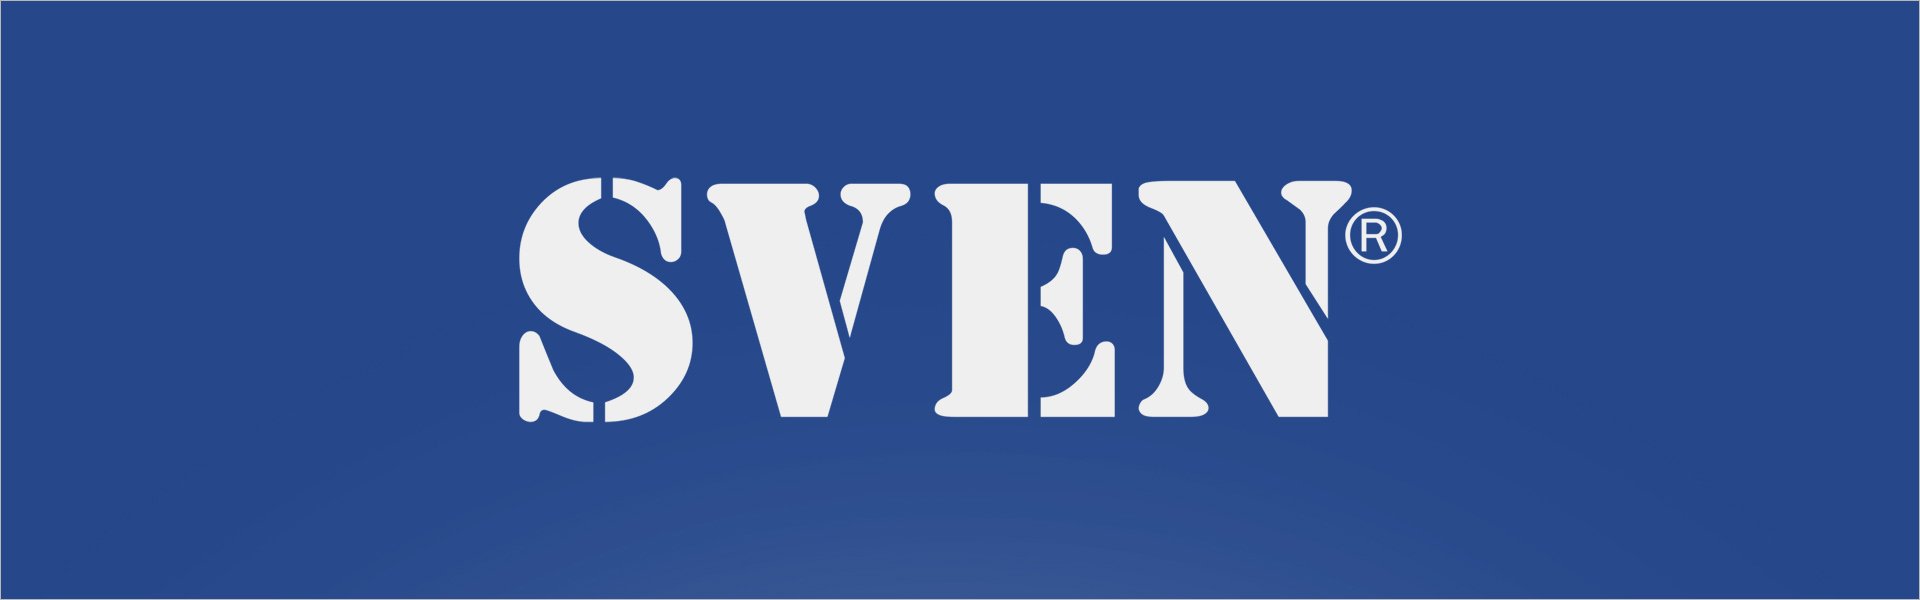 Sven 430, must Sven